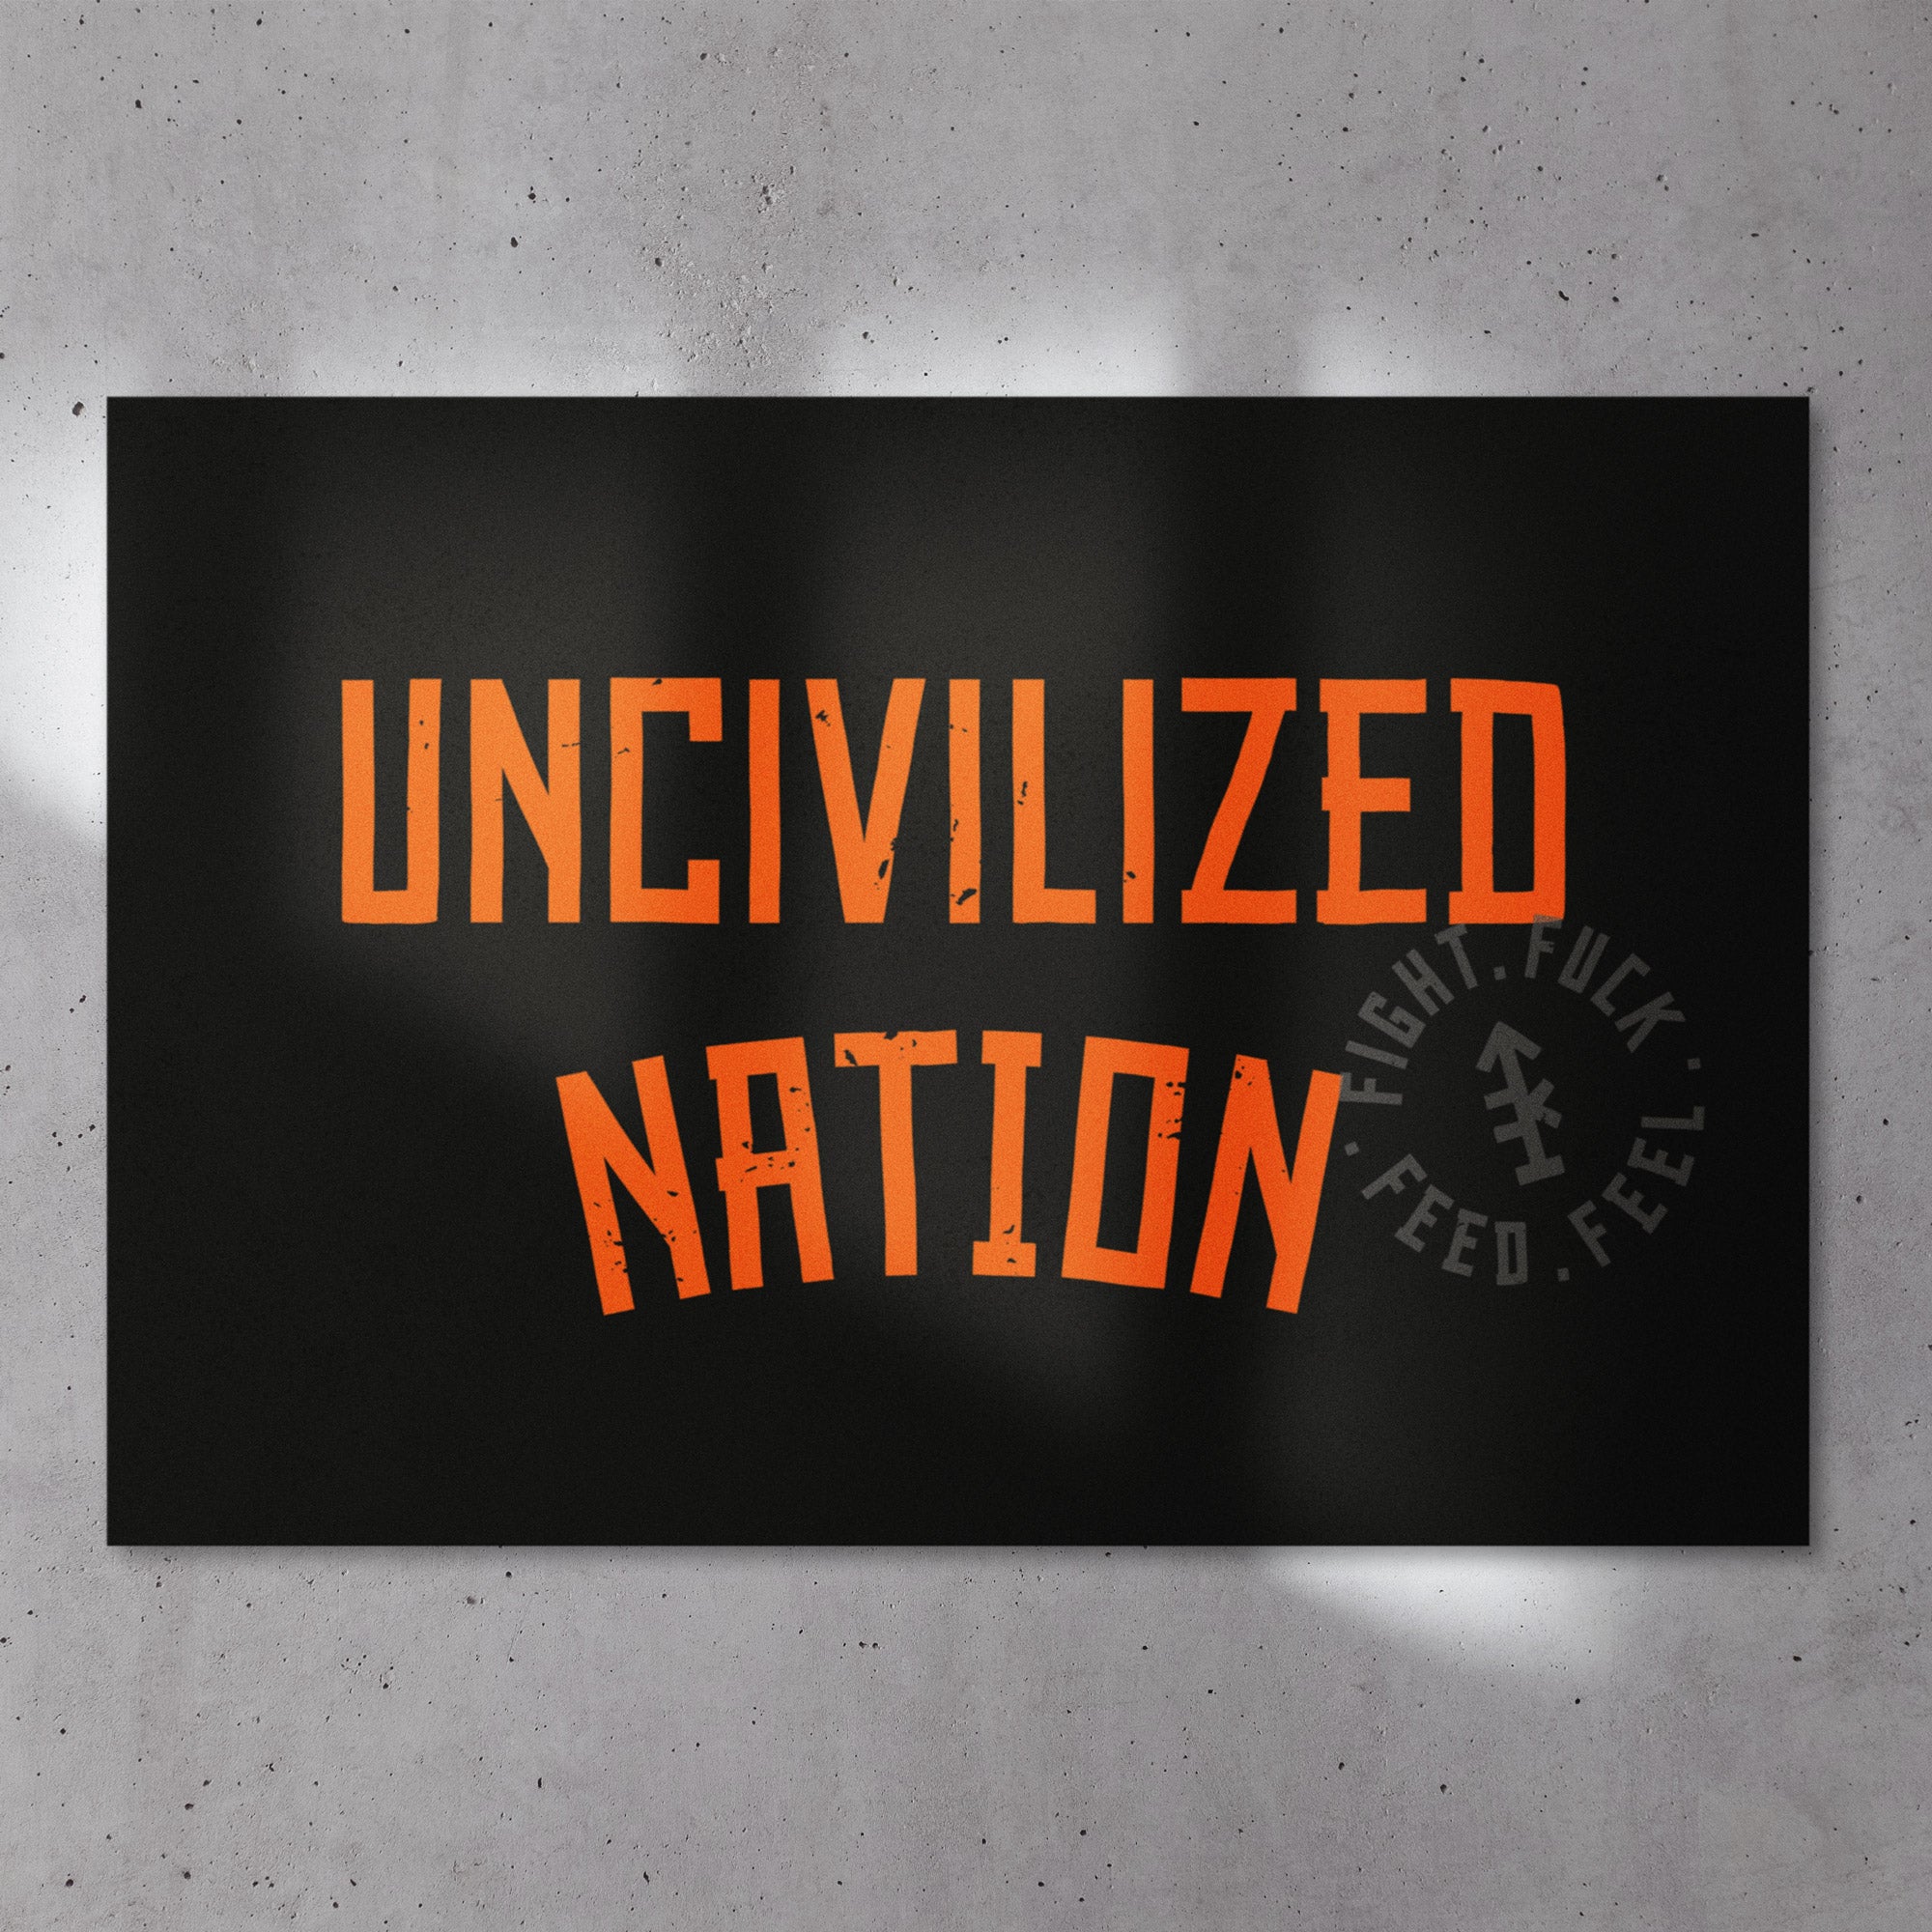 UNcivilized Nation Poster